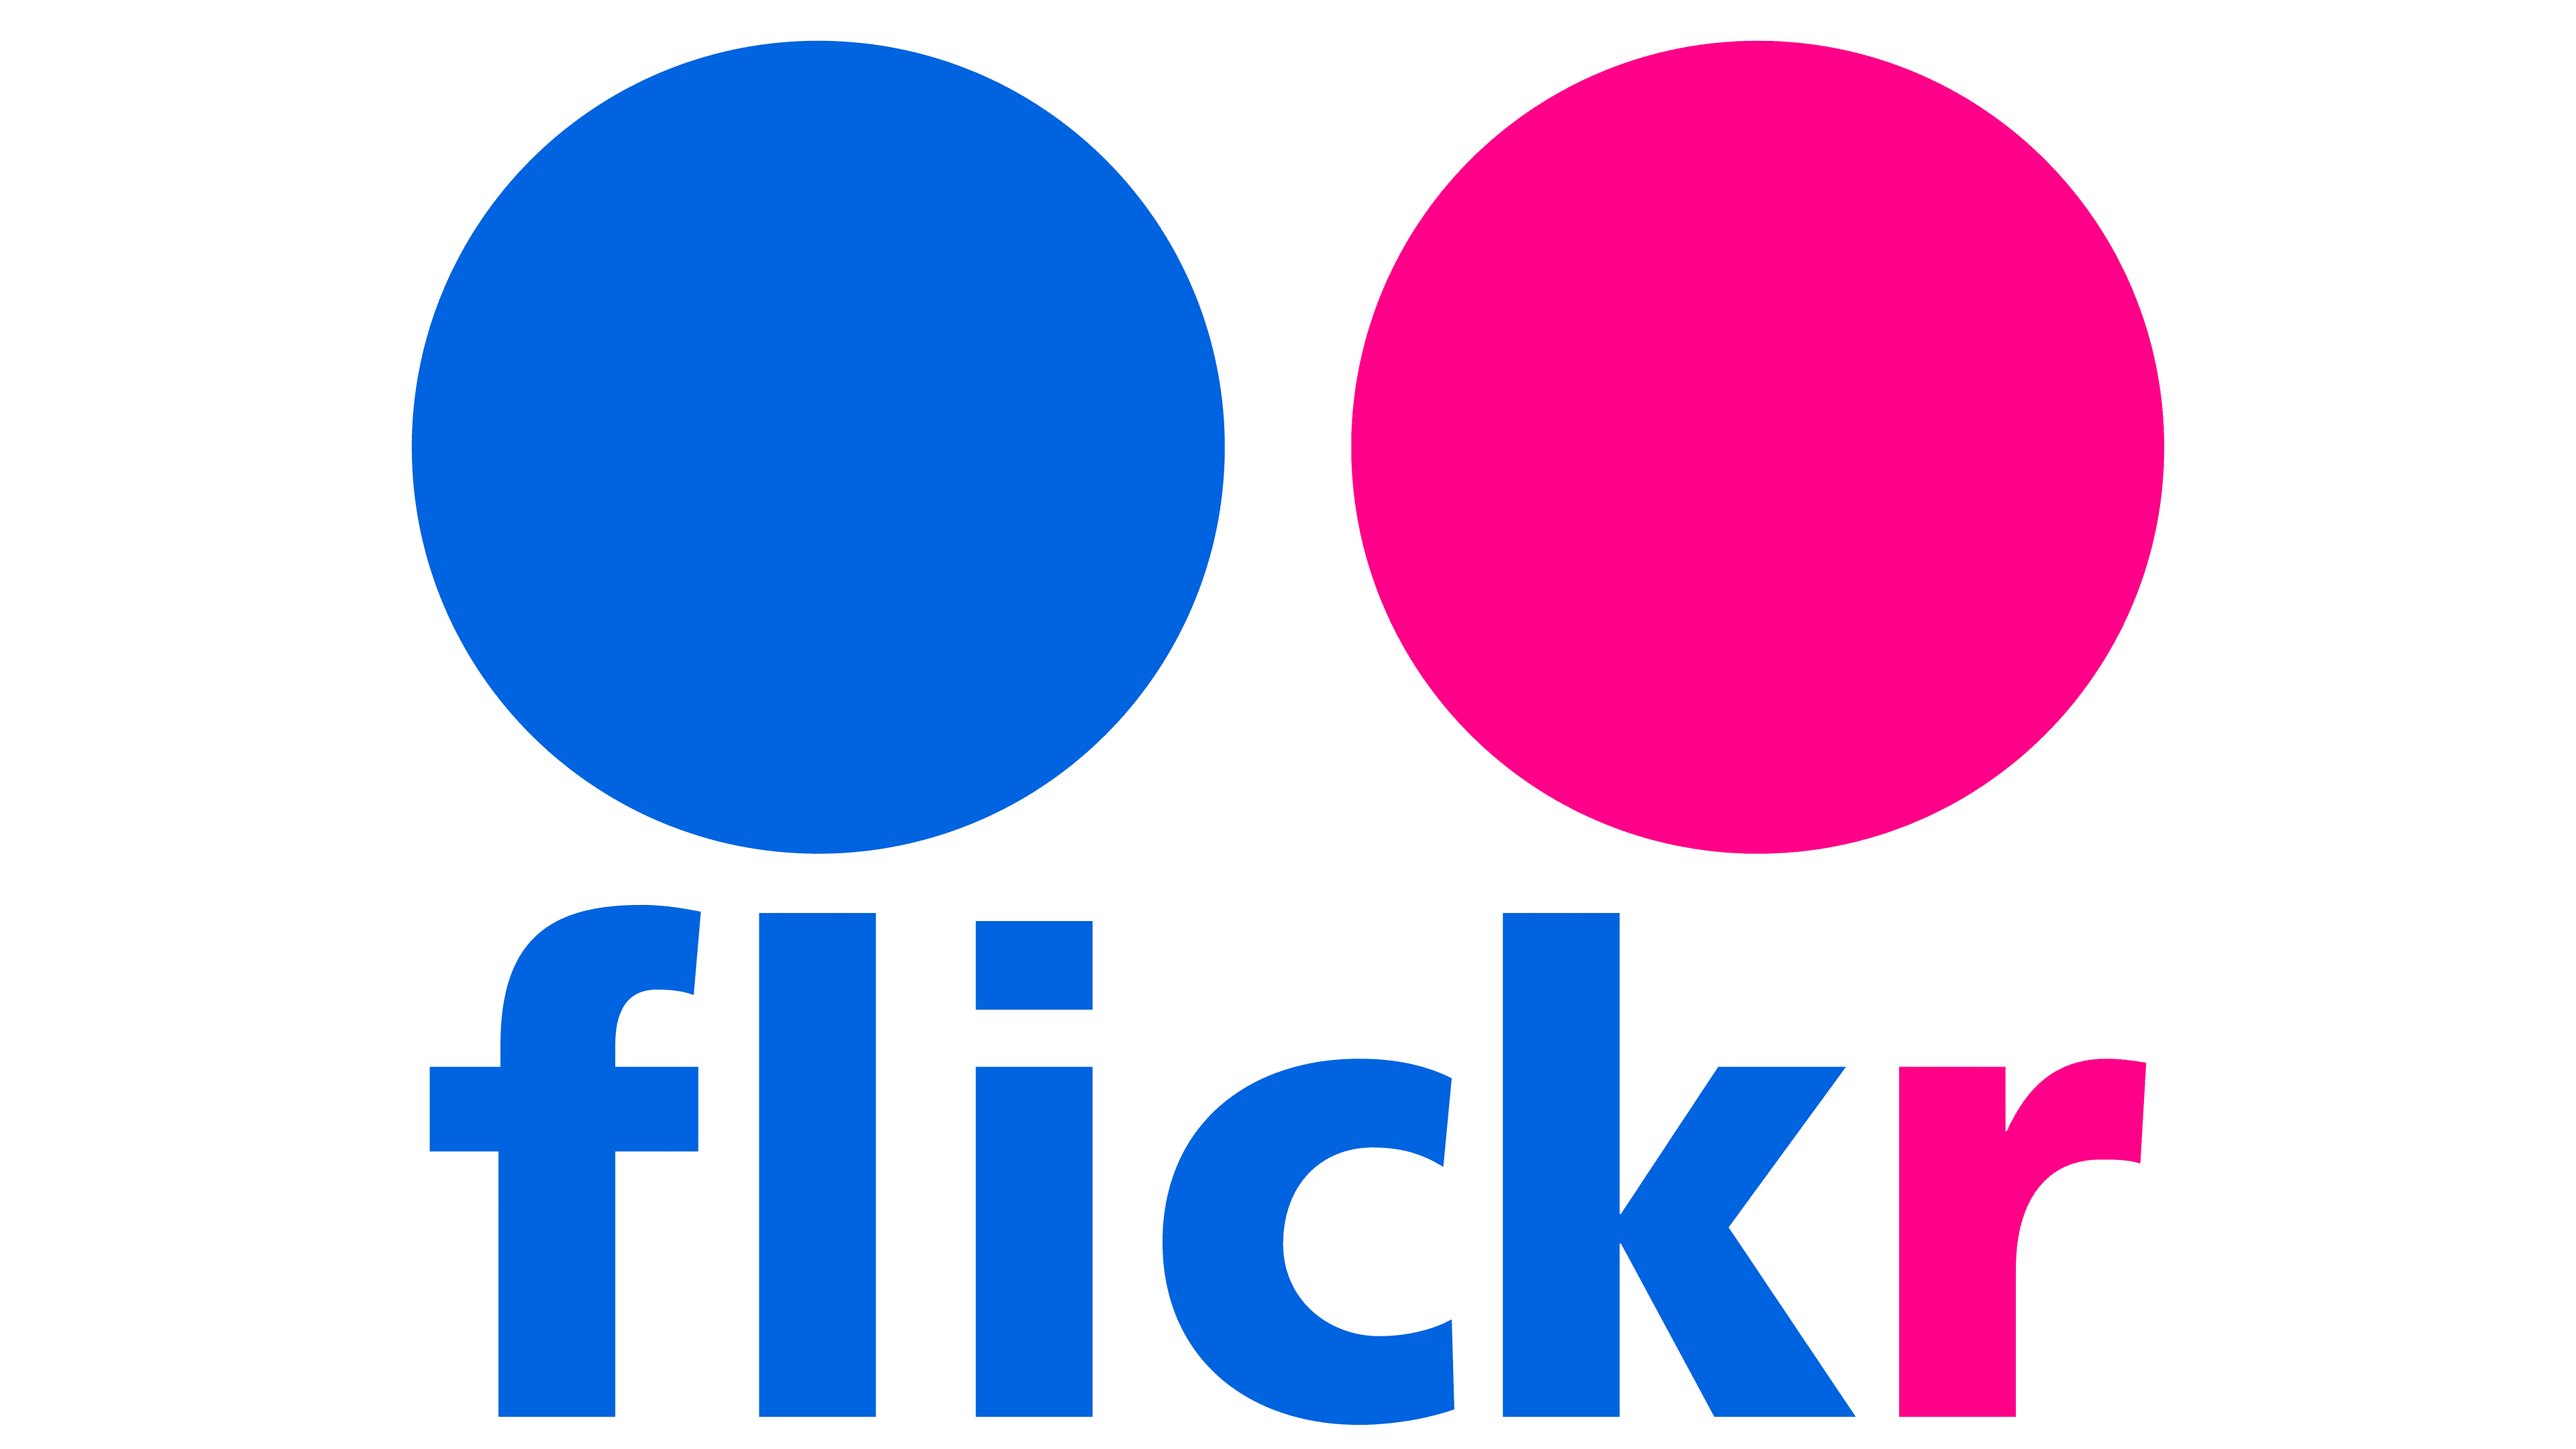 Flickr Logo, symbol, meaning, history, PNG